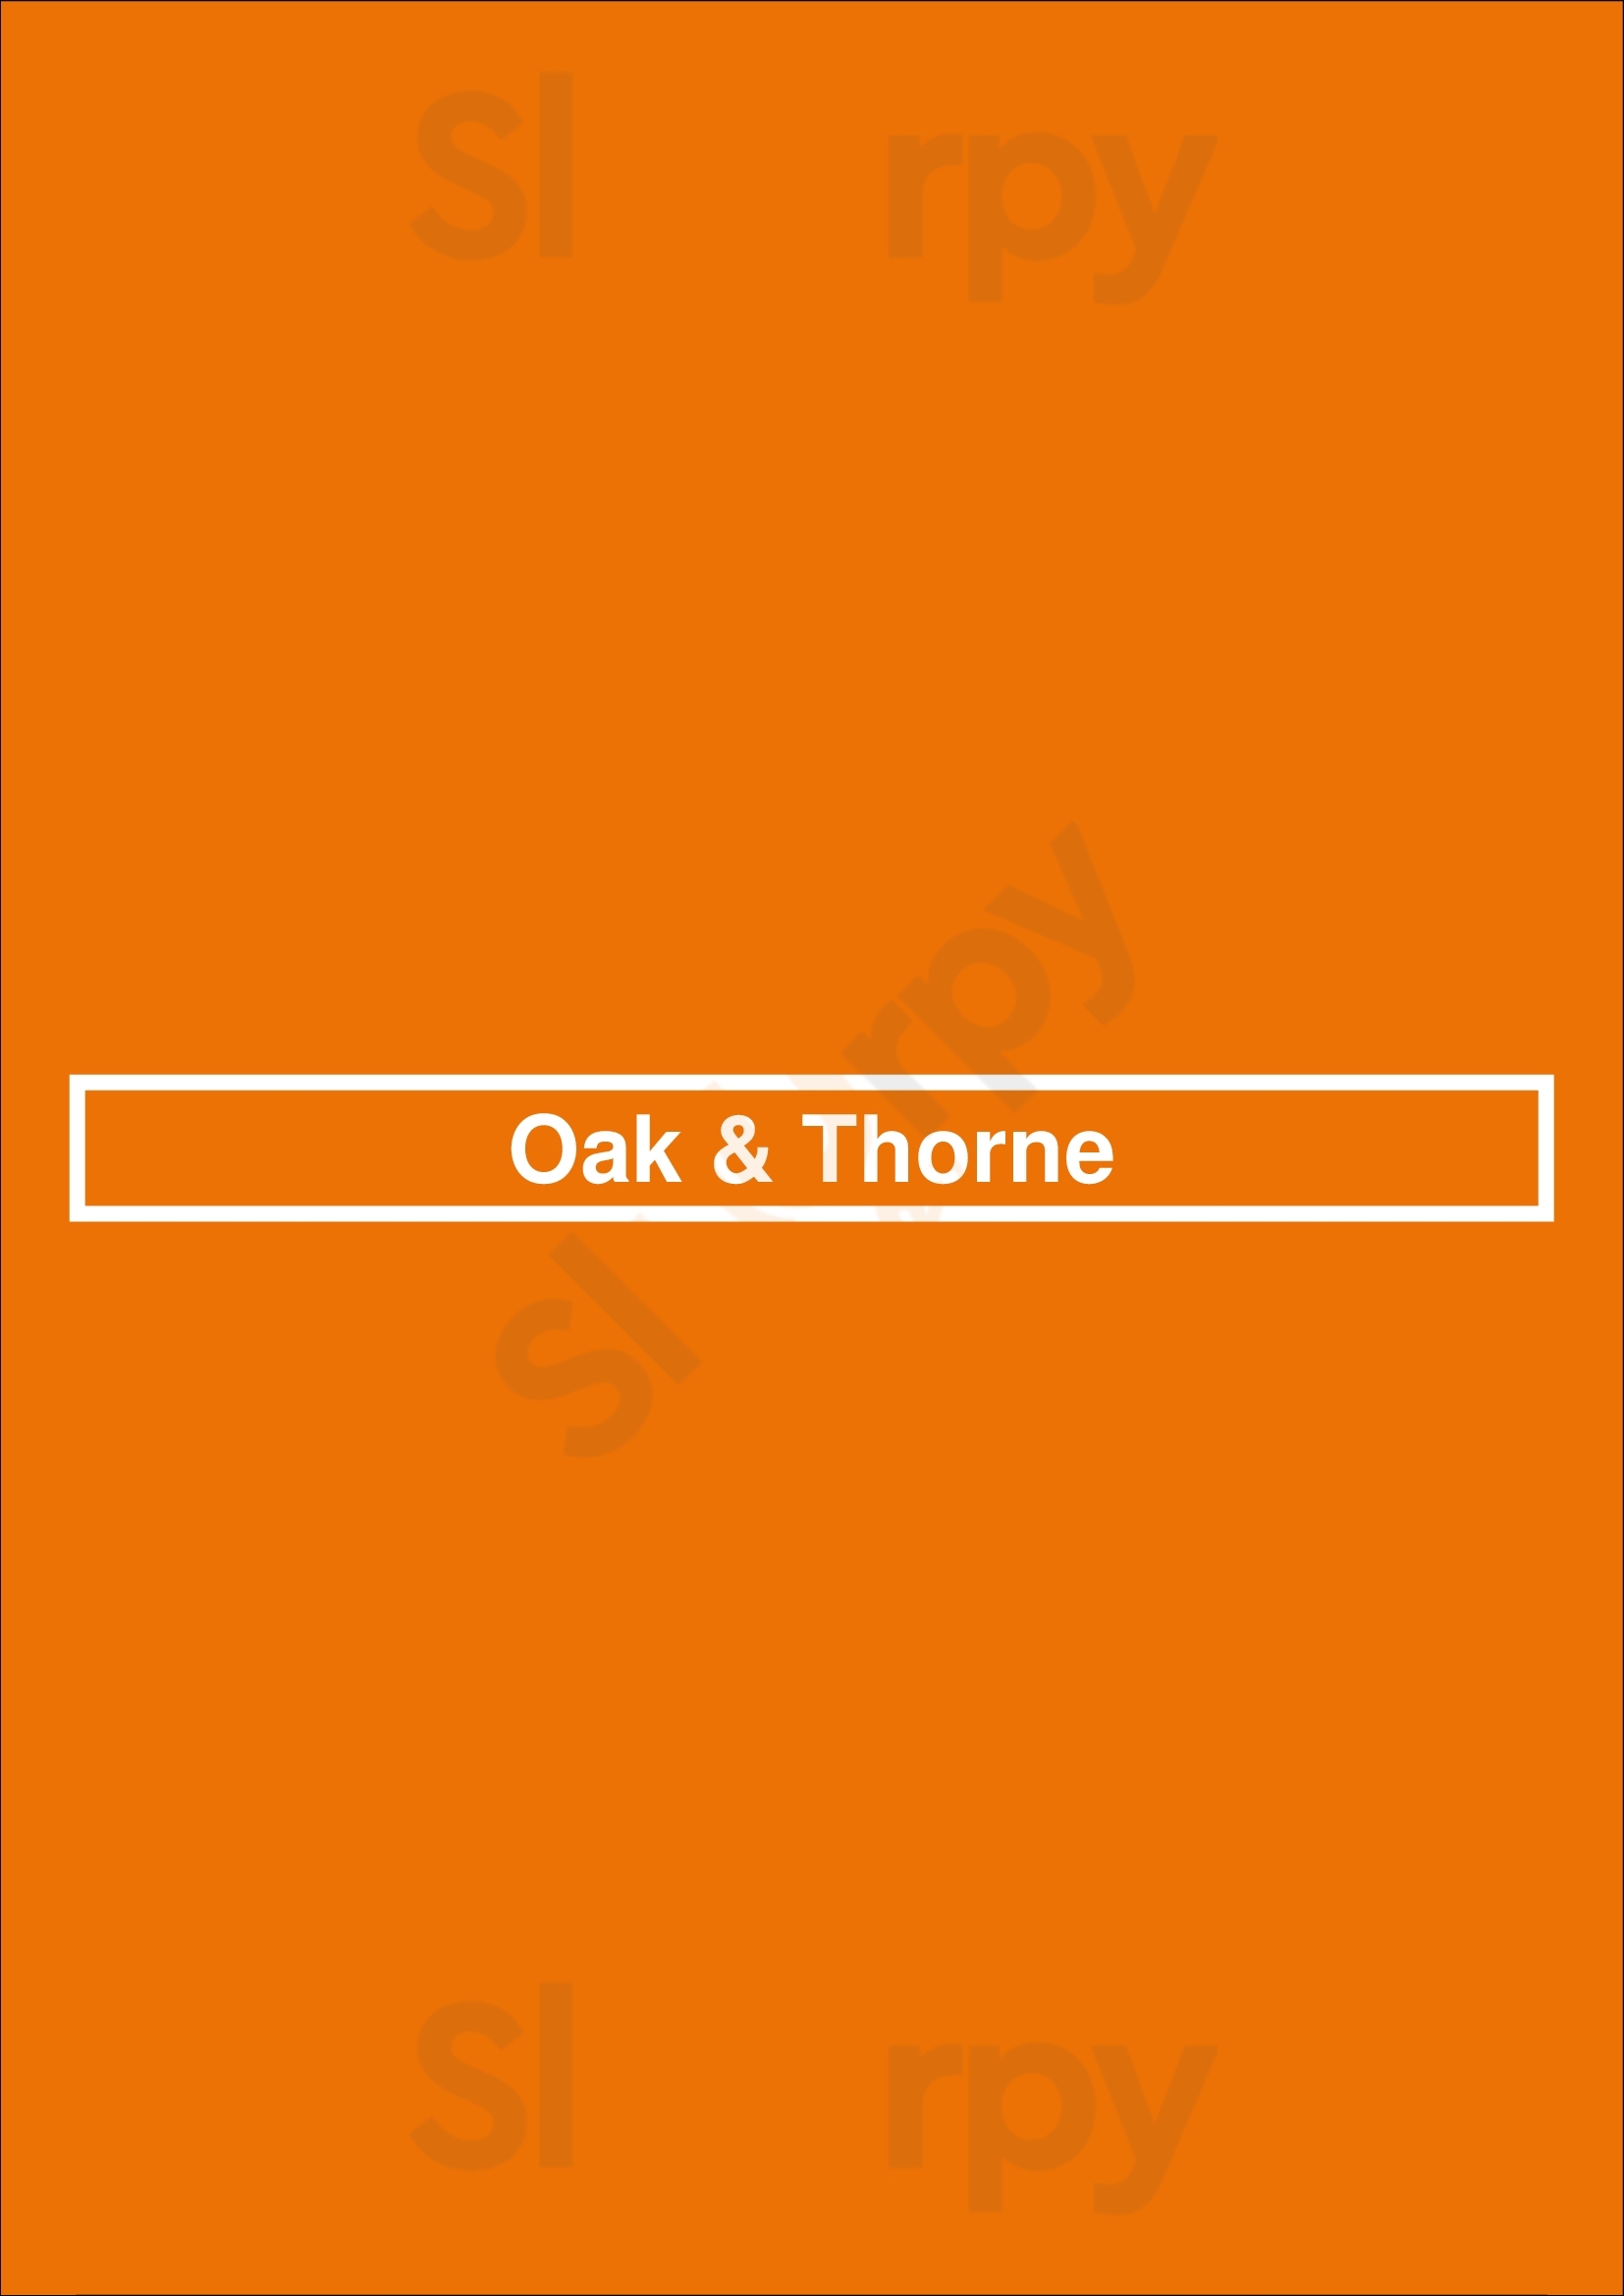 Oak & Thorne Langley City Menu - 1